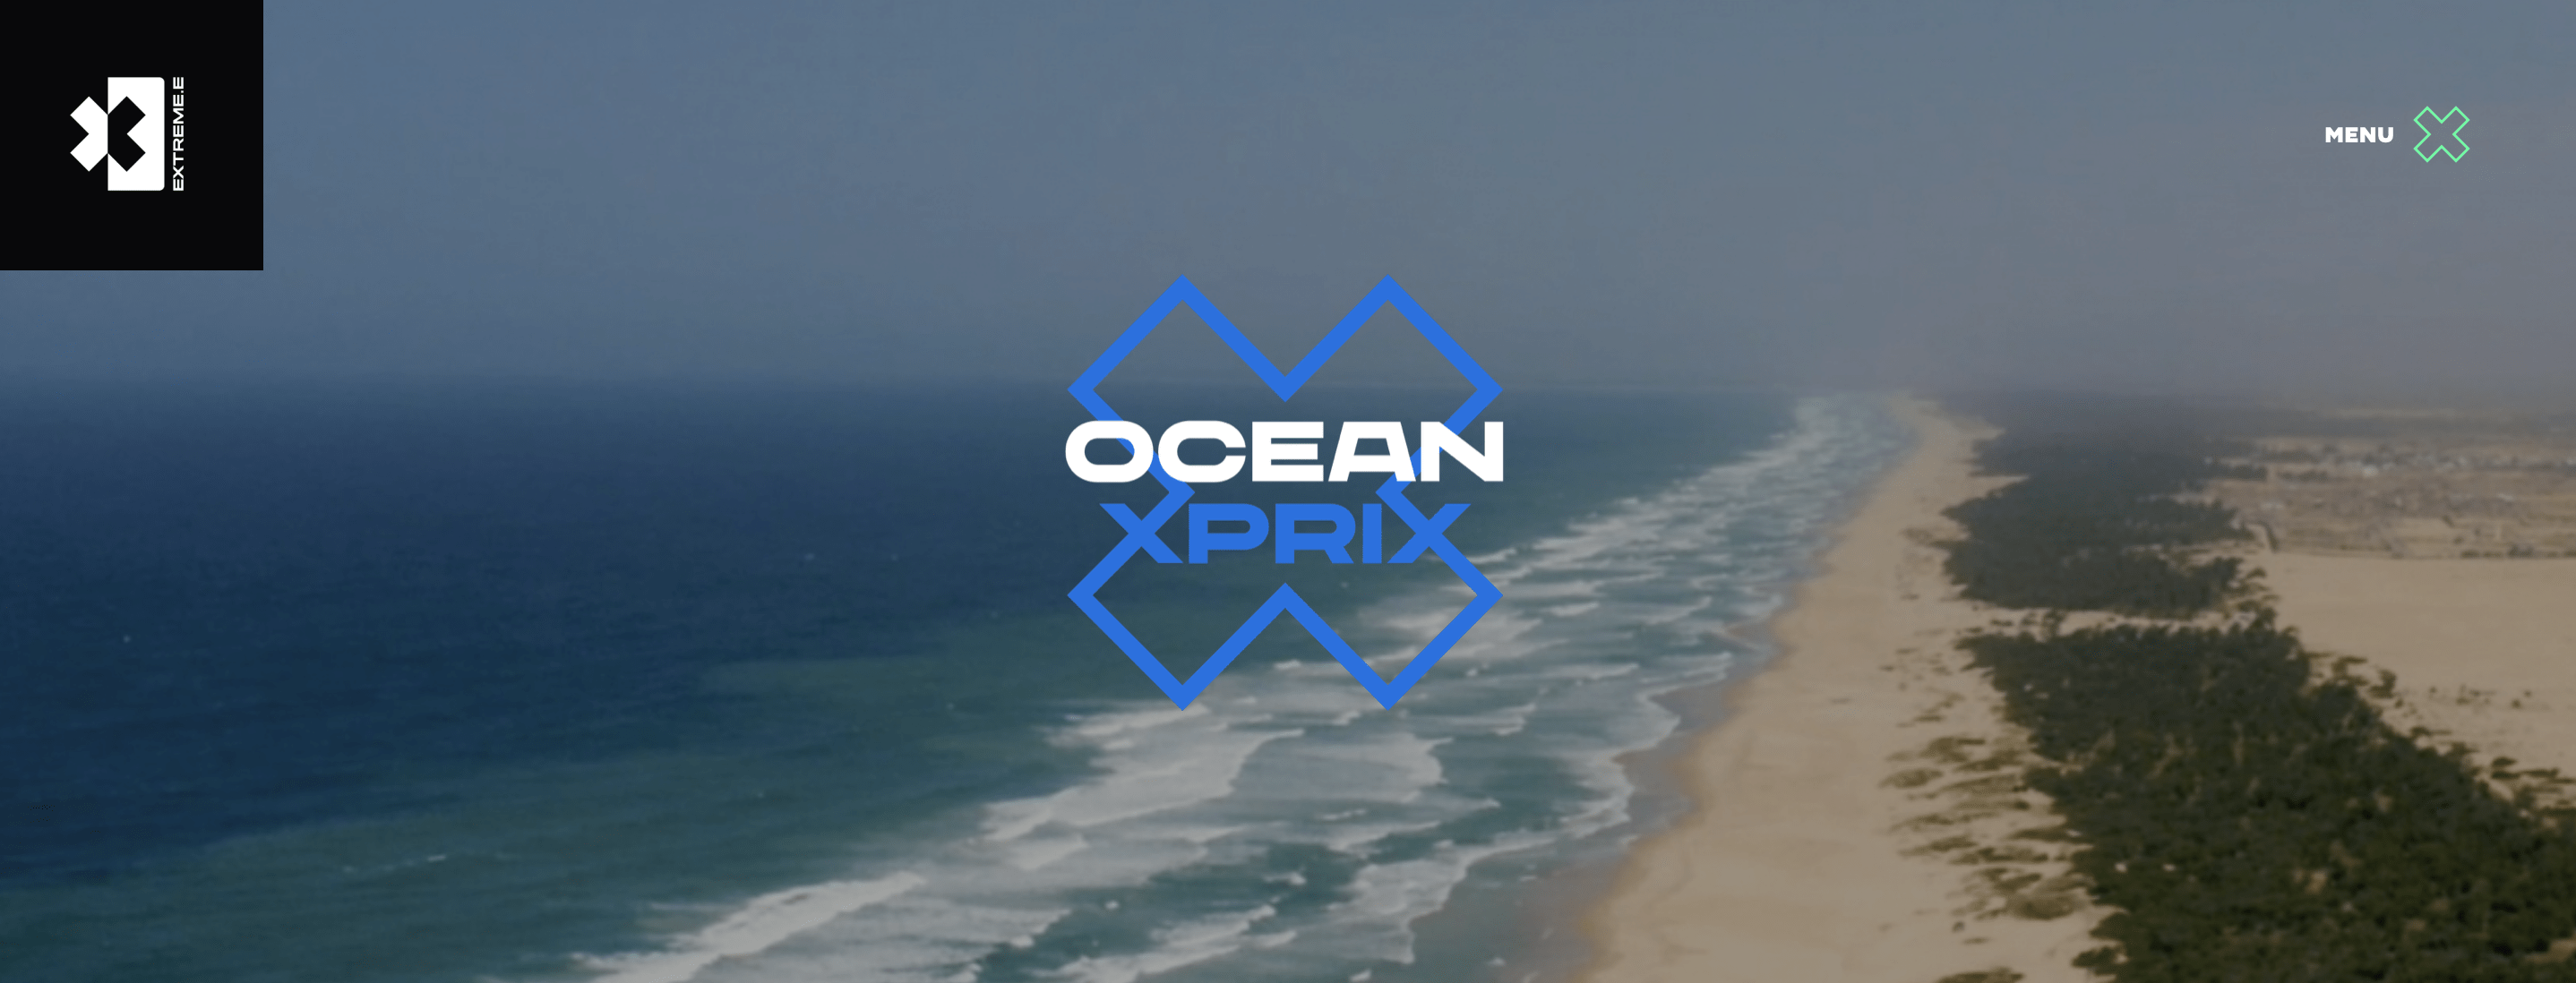 ocean prix